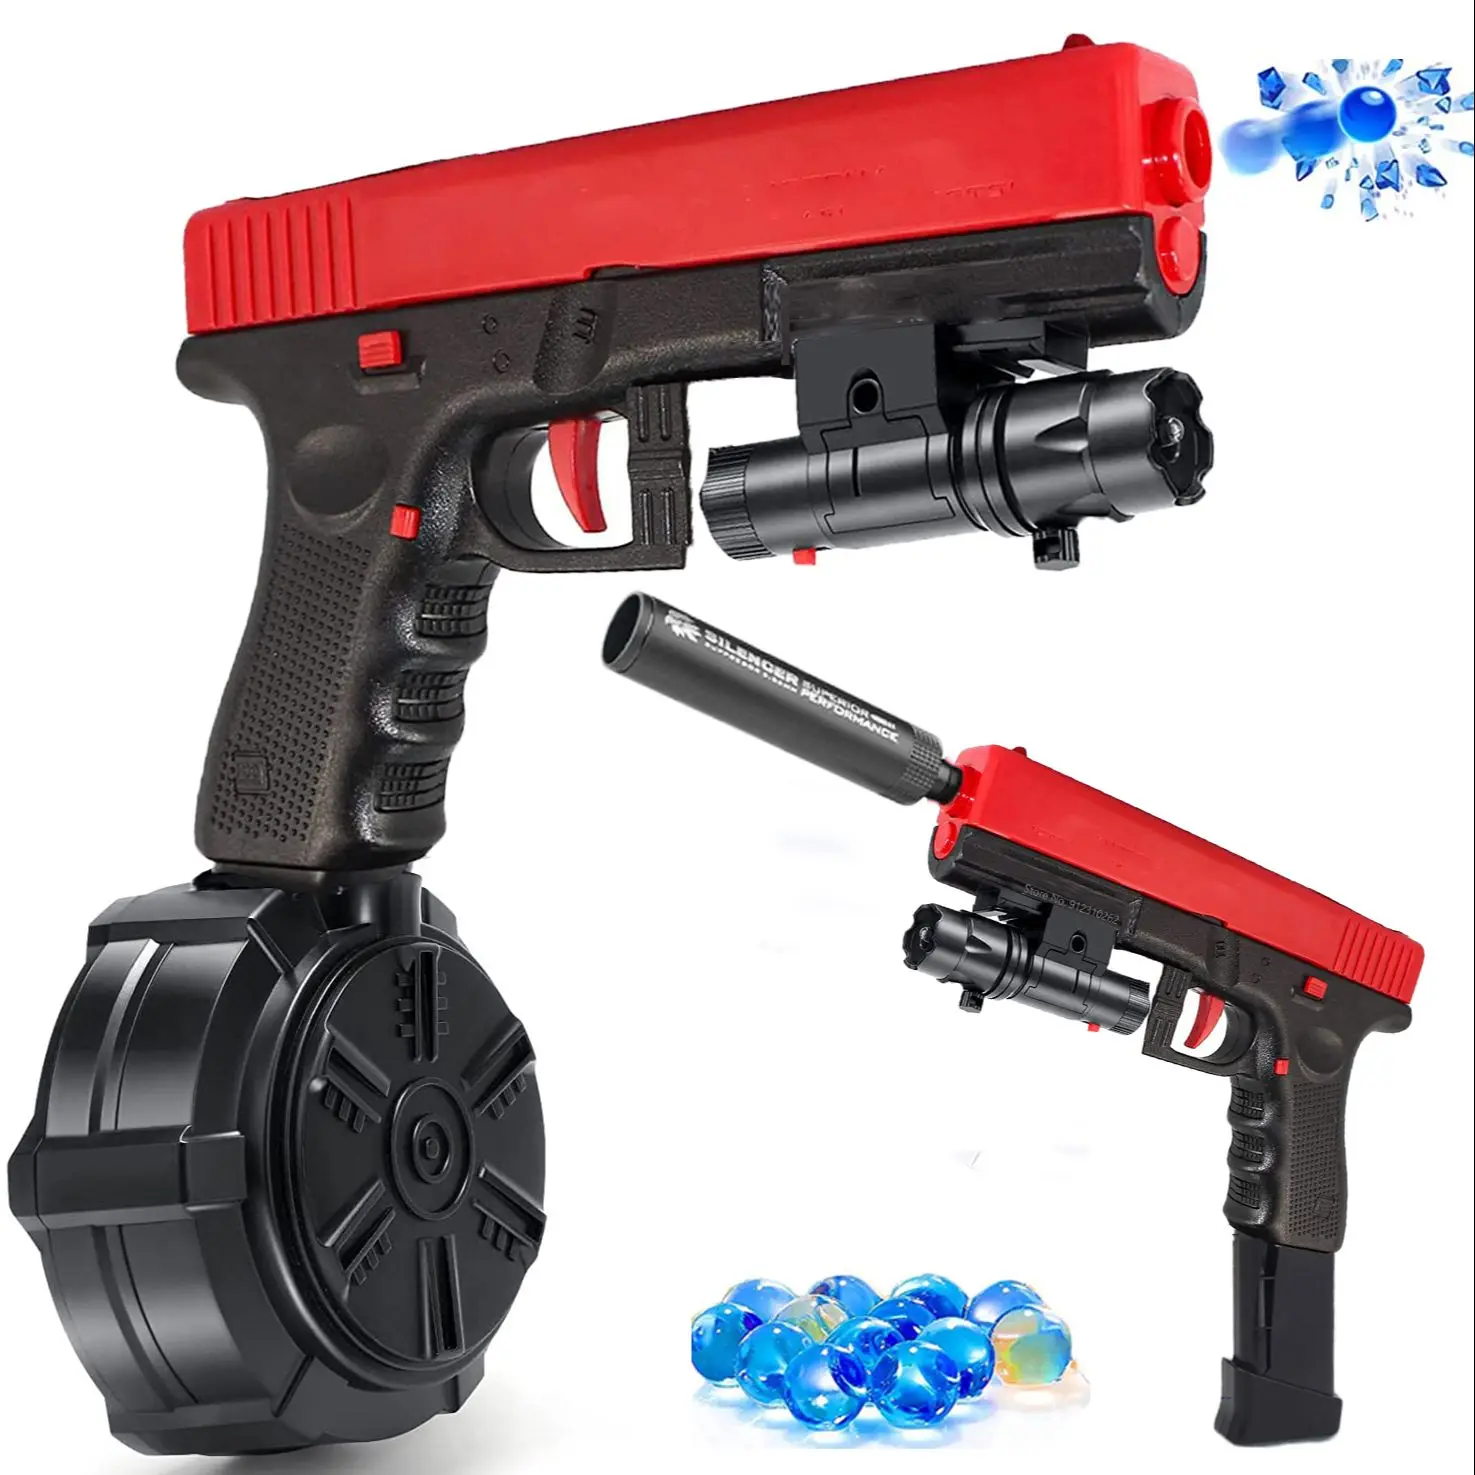 

New Electric & Manual Gel Blaster Water Splatter Ball Toy Gun Paintball Pistol Outdoor Games CS Airsoft Handgun For Boys Gift